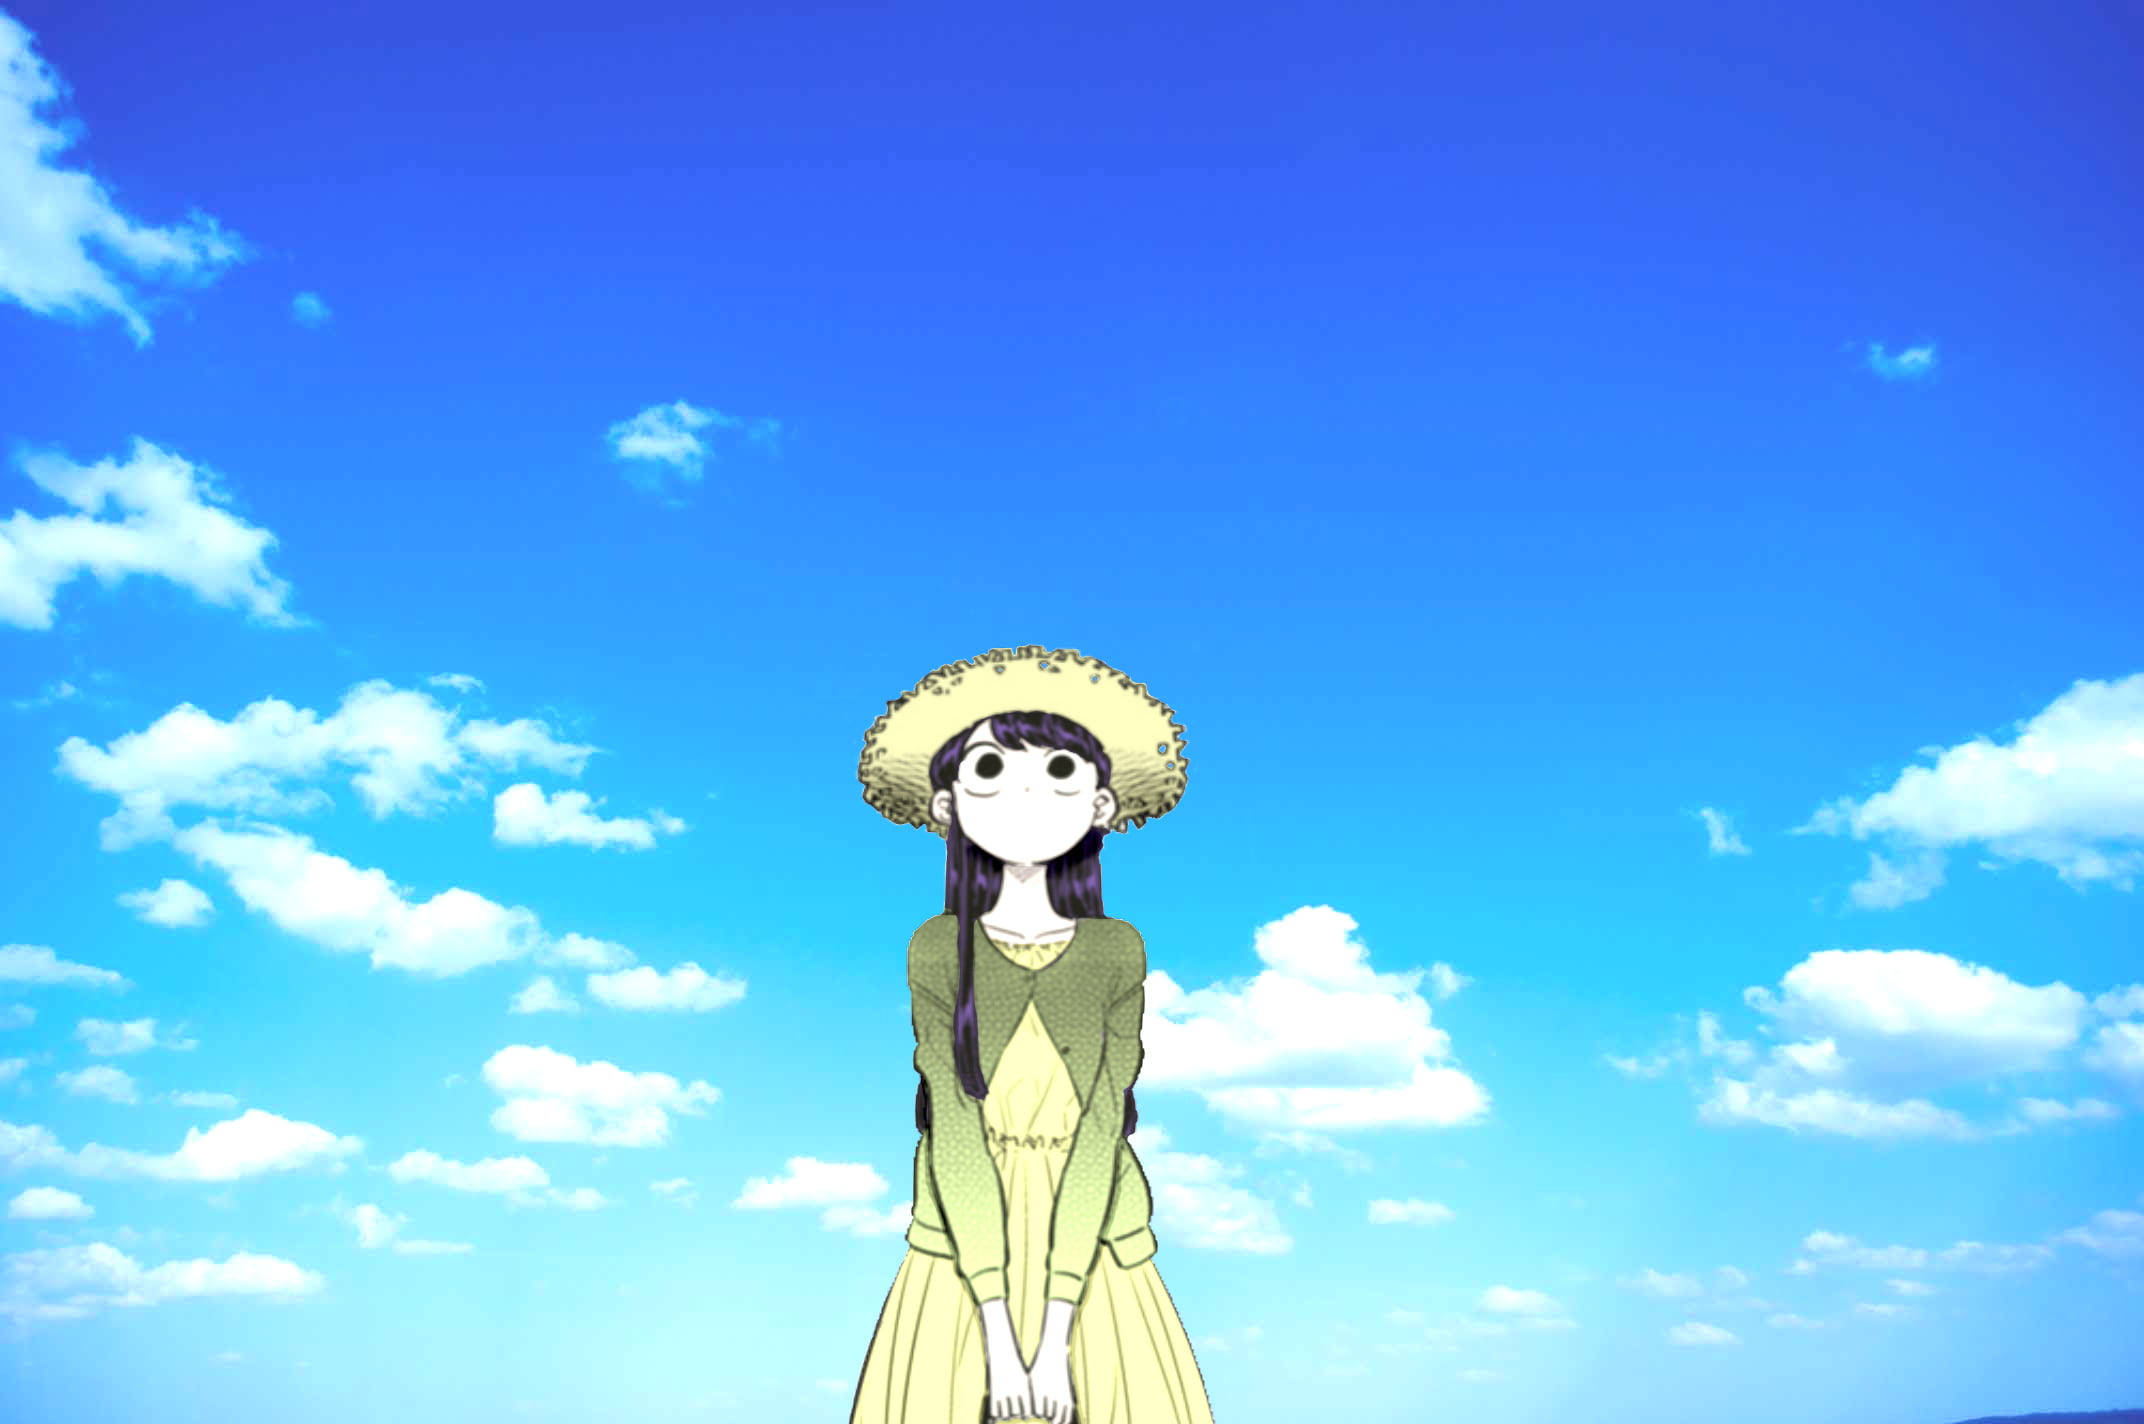 Komi San On Scenic Blue Sky Background